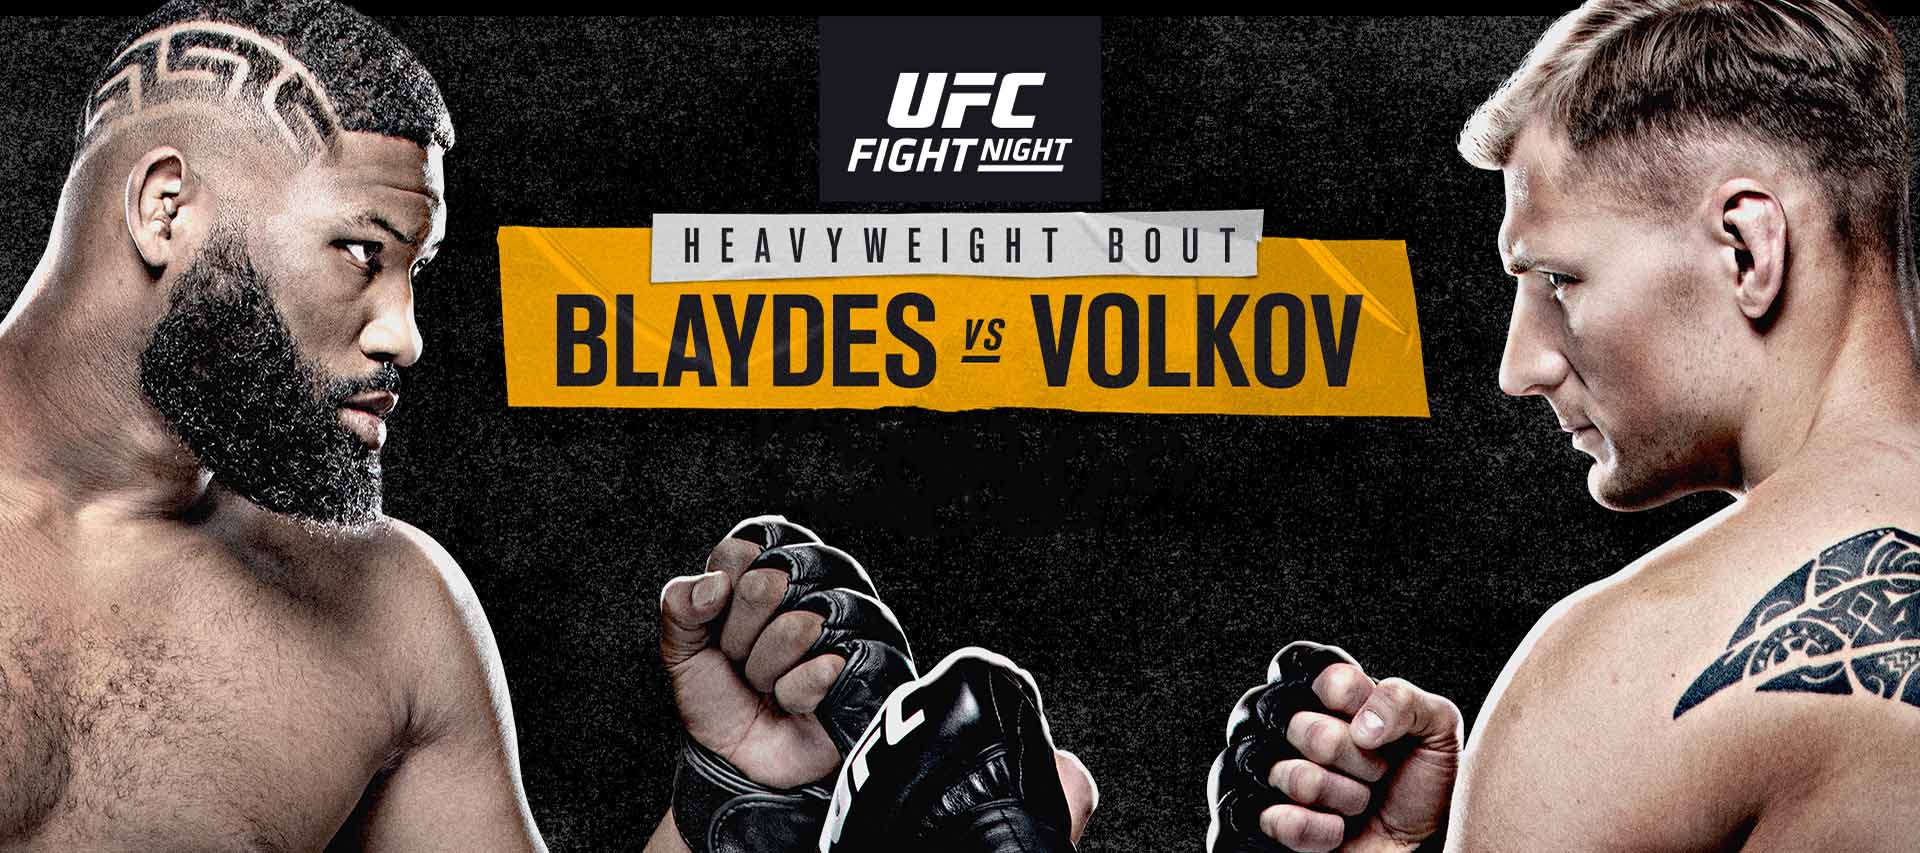 UFC Fight Night: Blaydes Vs Volkov - MMA News & Odds